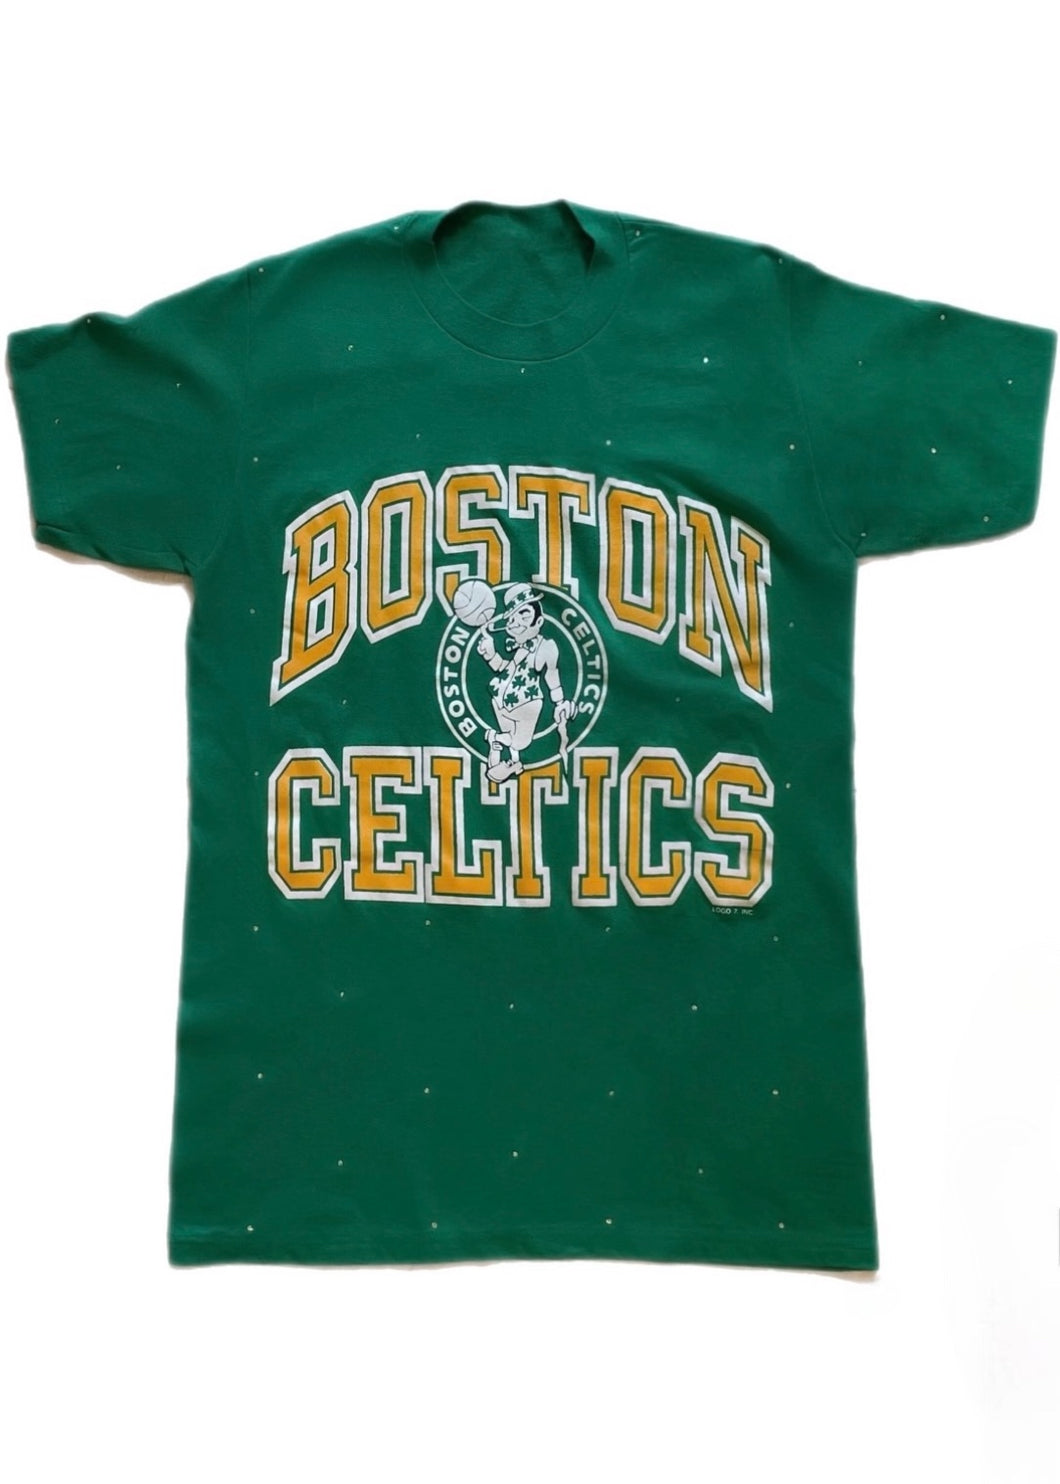 Boston Celtics, NBA One of a KIND Vintage Tee Shirt with Crystal Star Design